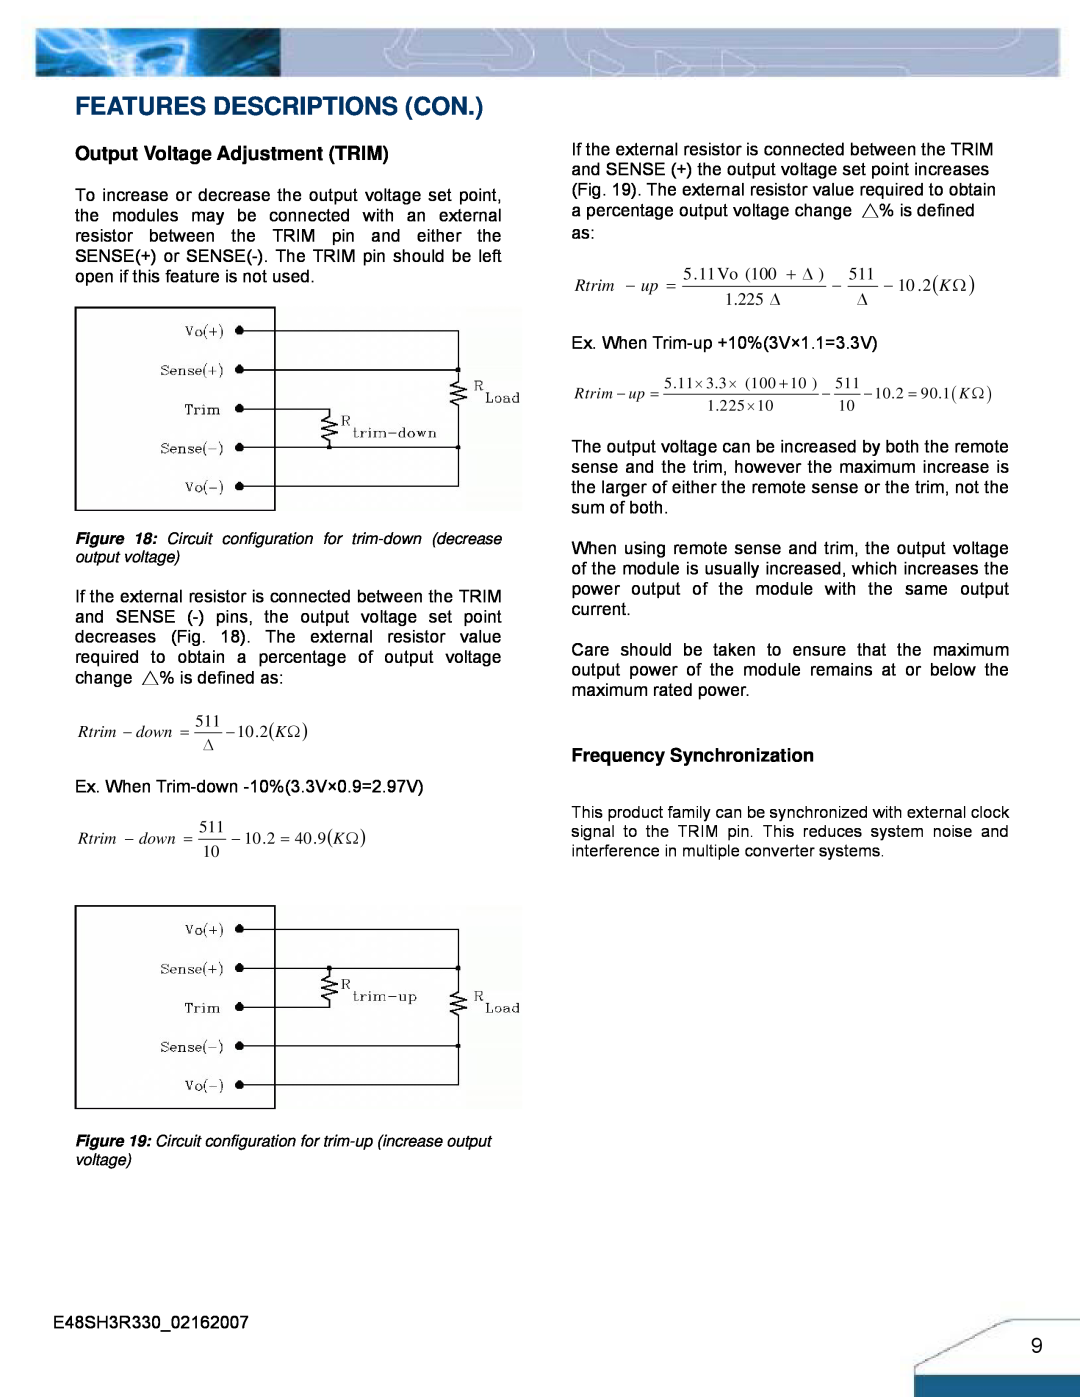 Delta Electronics Series E48SH manual Features Descriptions Con, Output Voltage Adjustment TRIM, Frequency Synchronization 